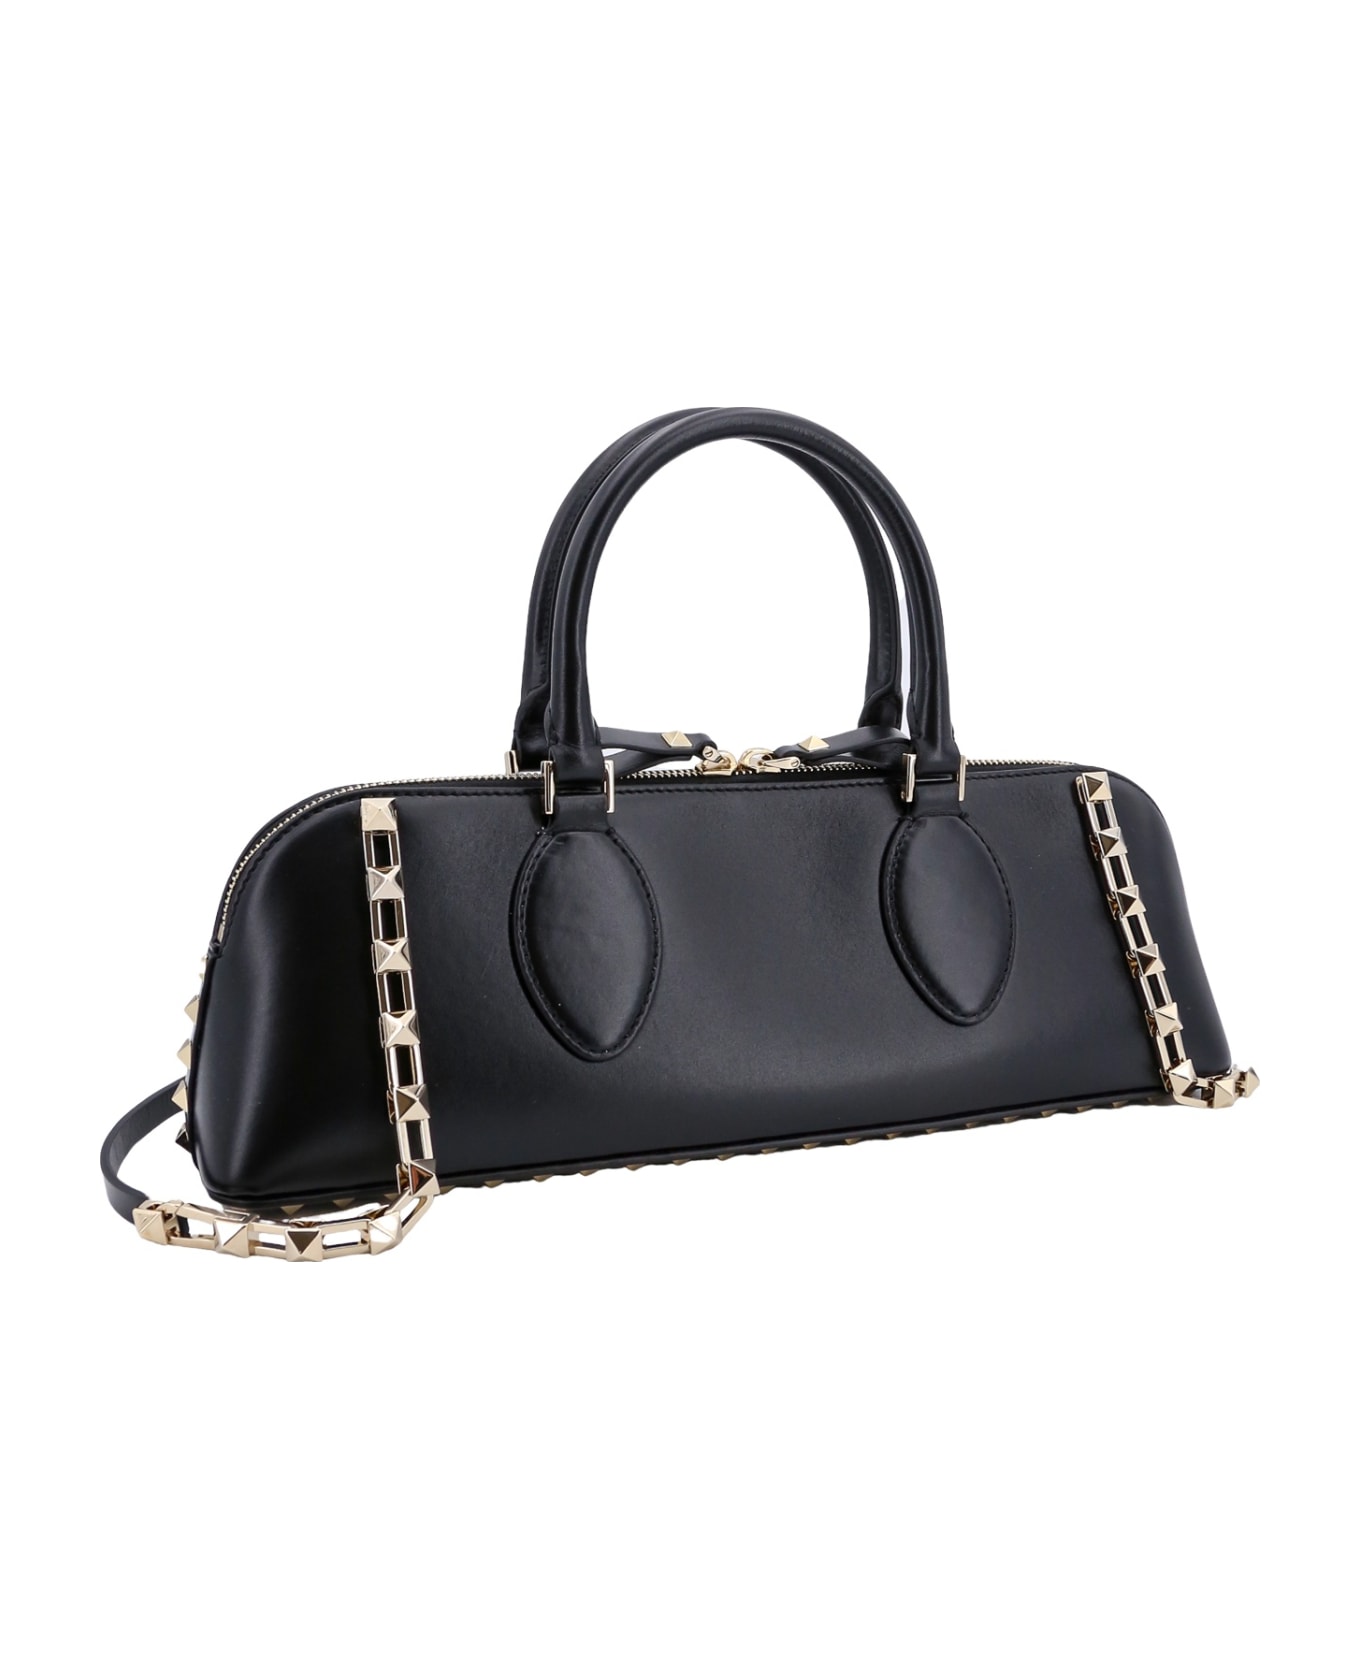 Valentino Garavani Rockstud E/w Leather Handbag - Black